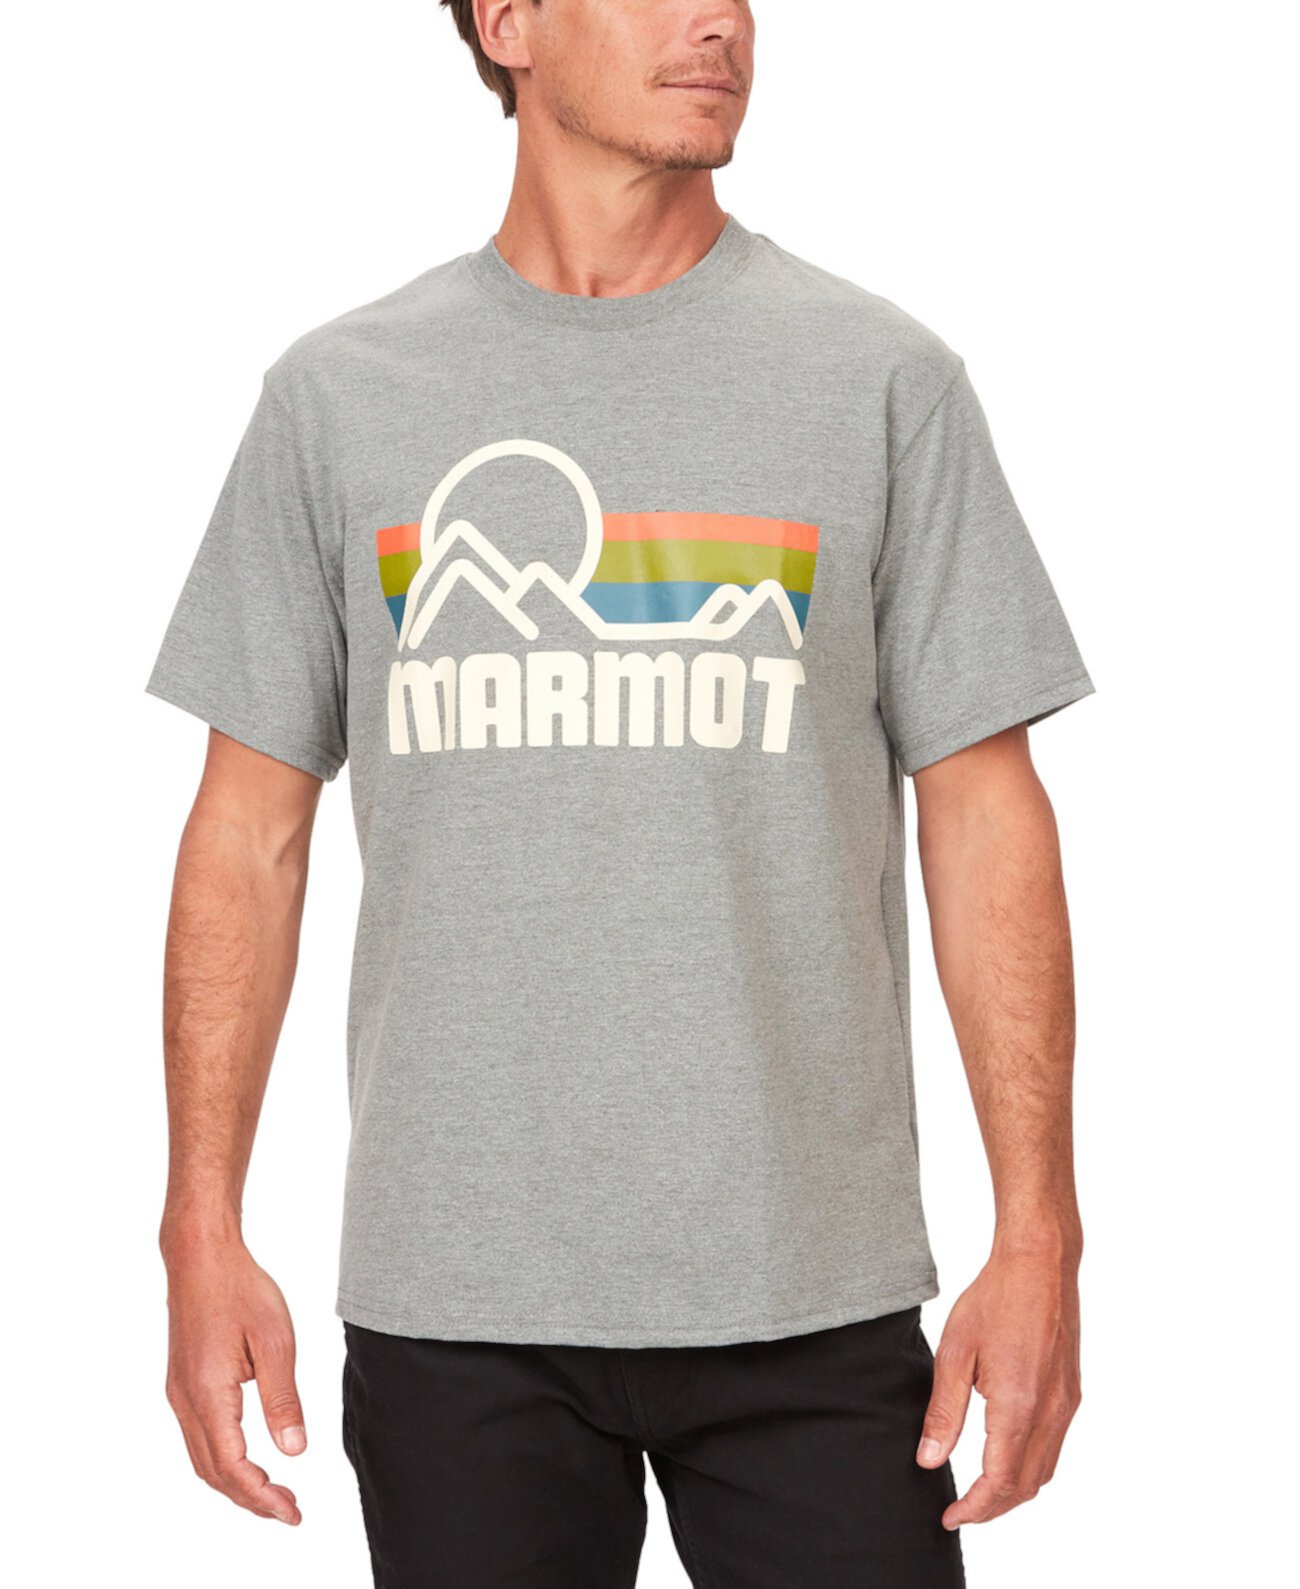 Мужская футболка с короткими рукавами и графическим логотипом Coastal Marmot